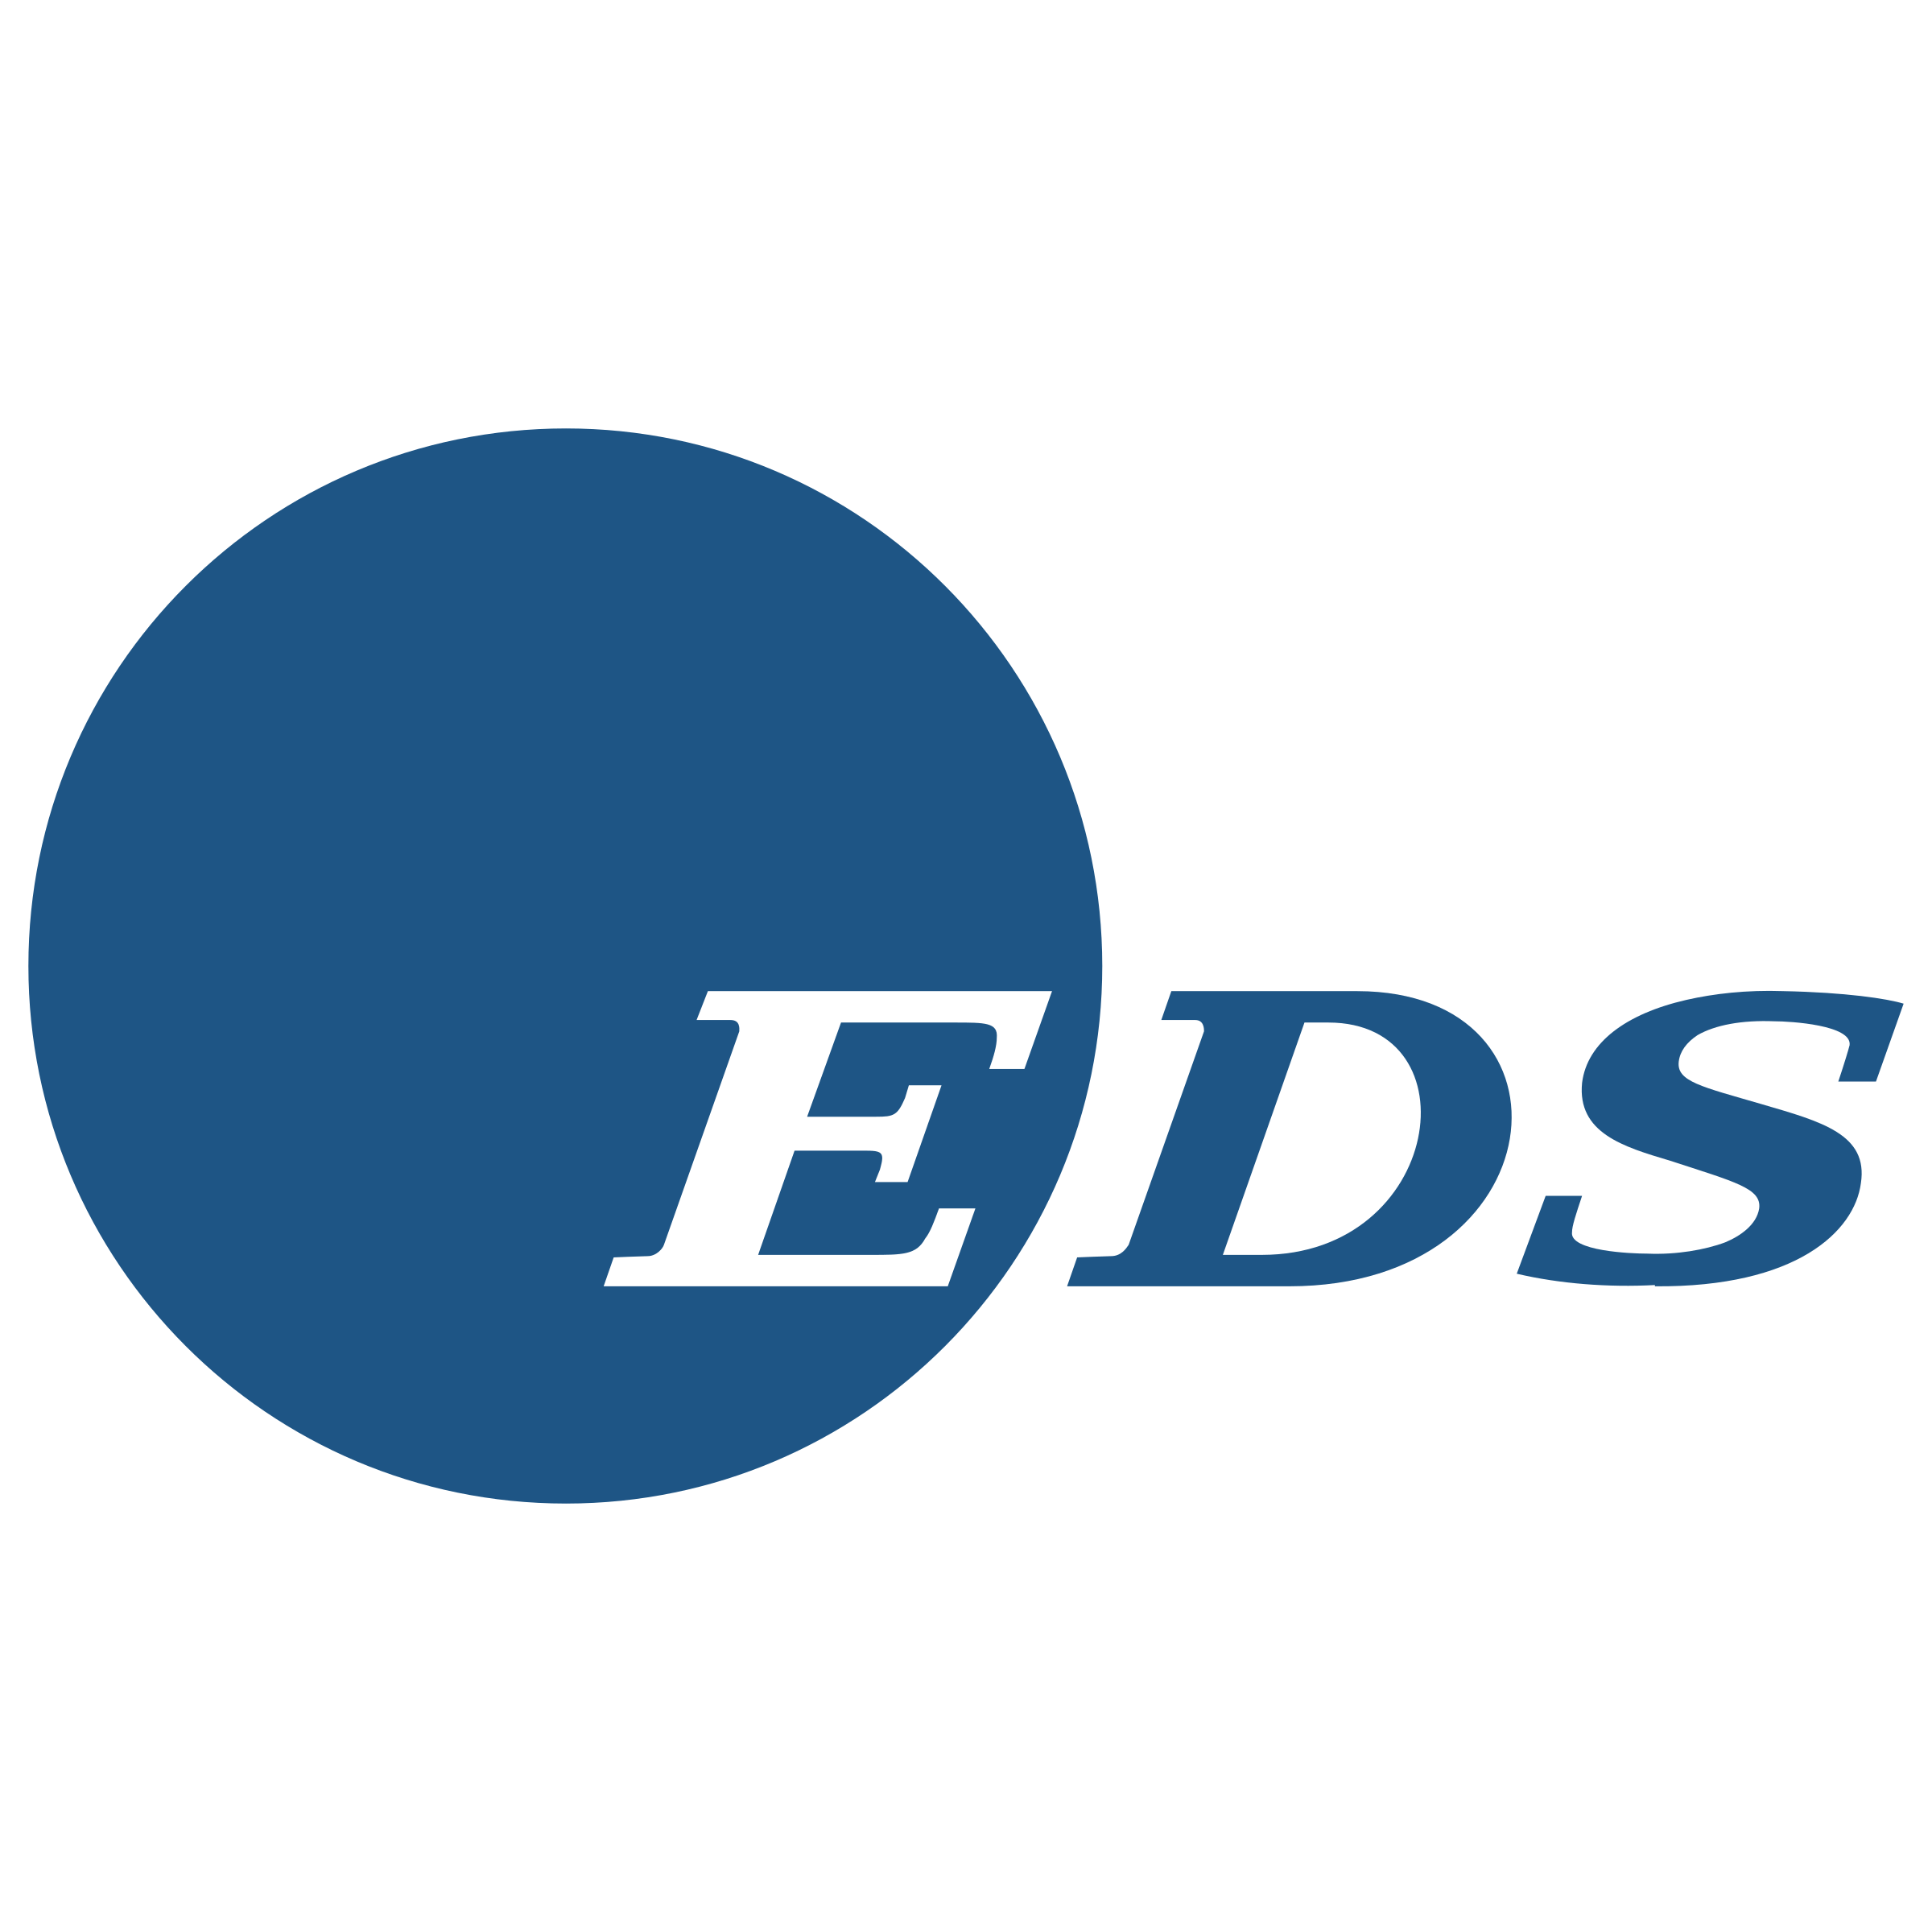 Ed's Logo - EDS Logo PNG Transparent & SVG Vector